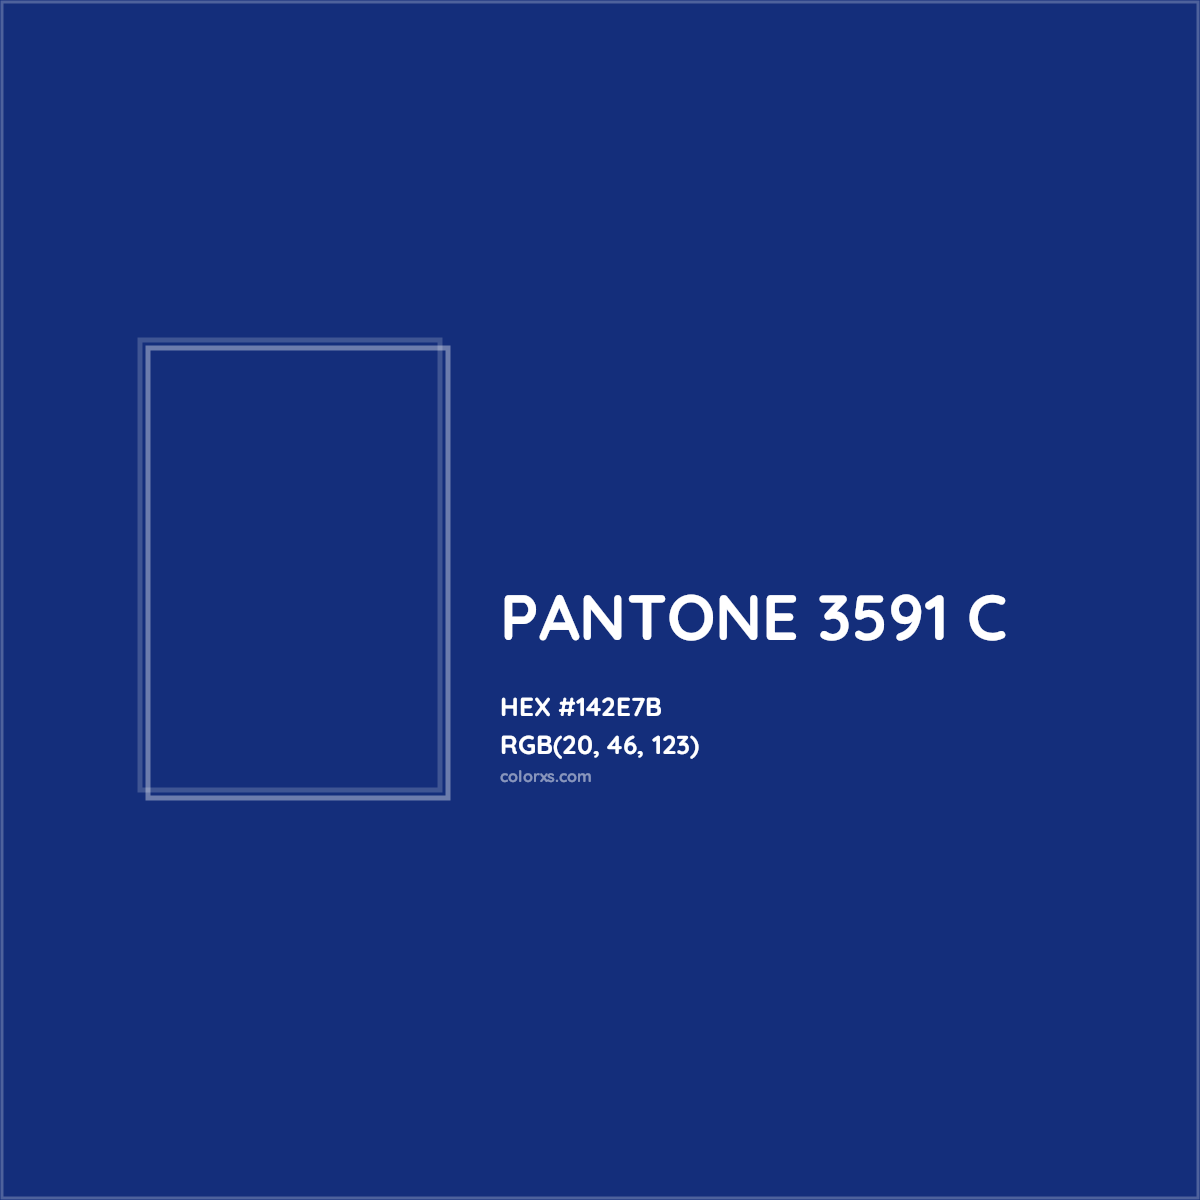 HEX #142E7B PANTONE 3591 C CMS Pantone PMS - Color Code